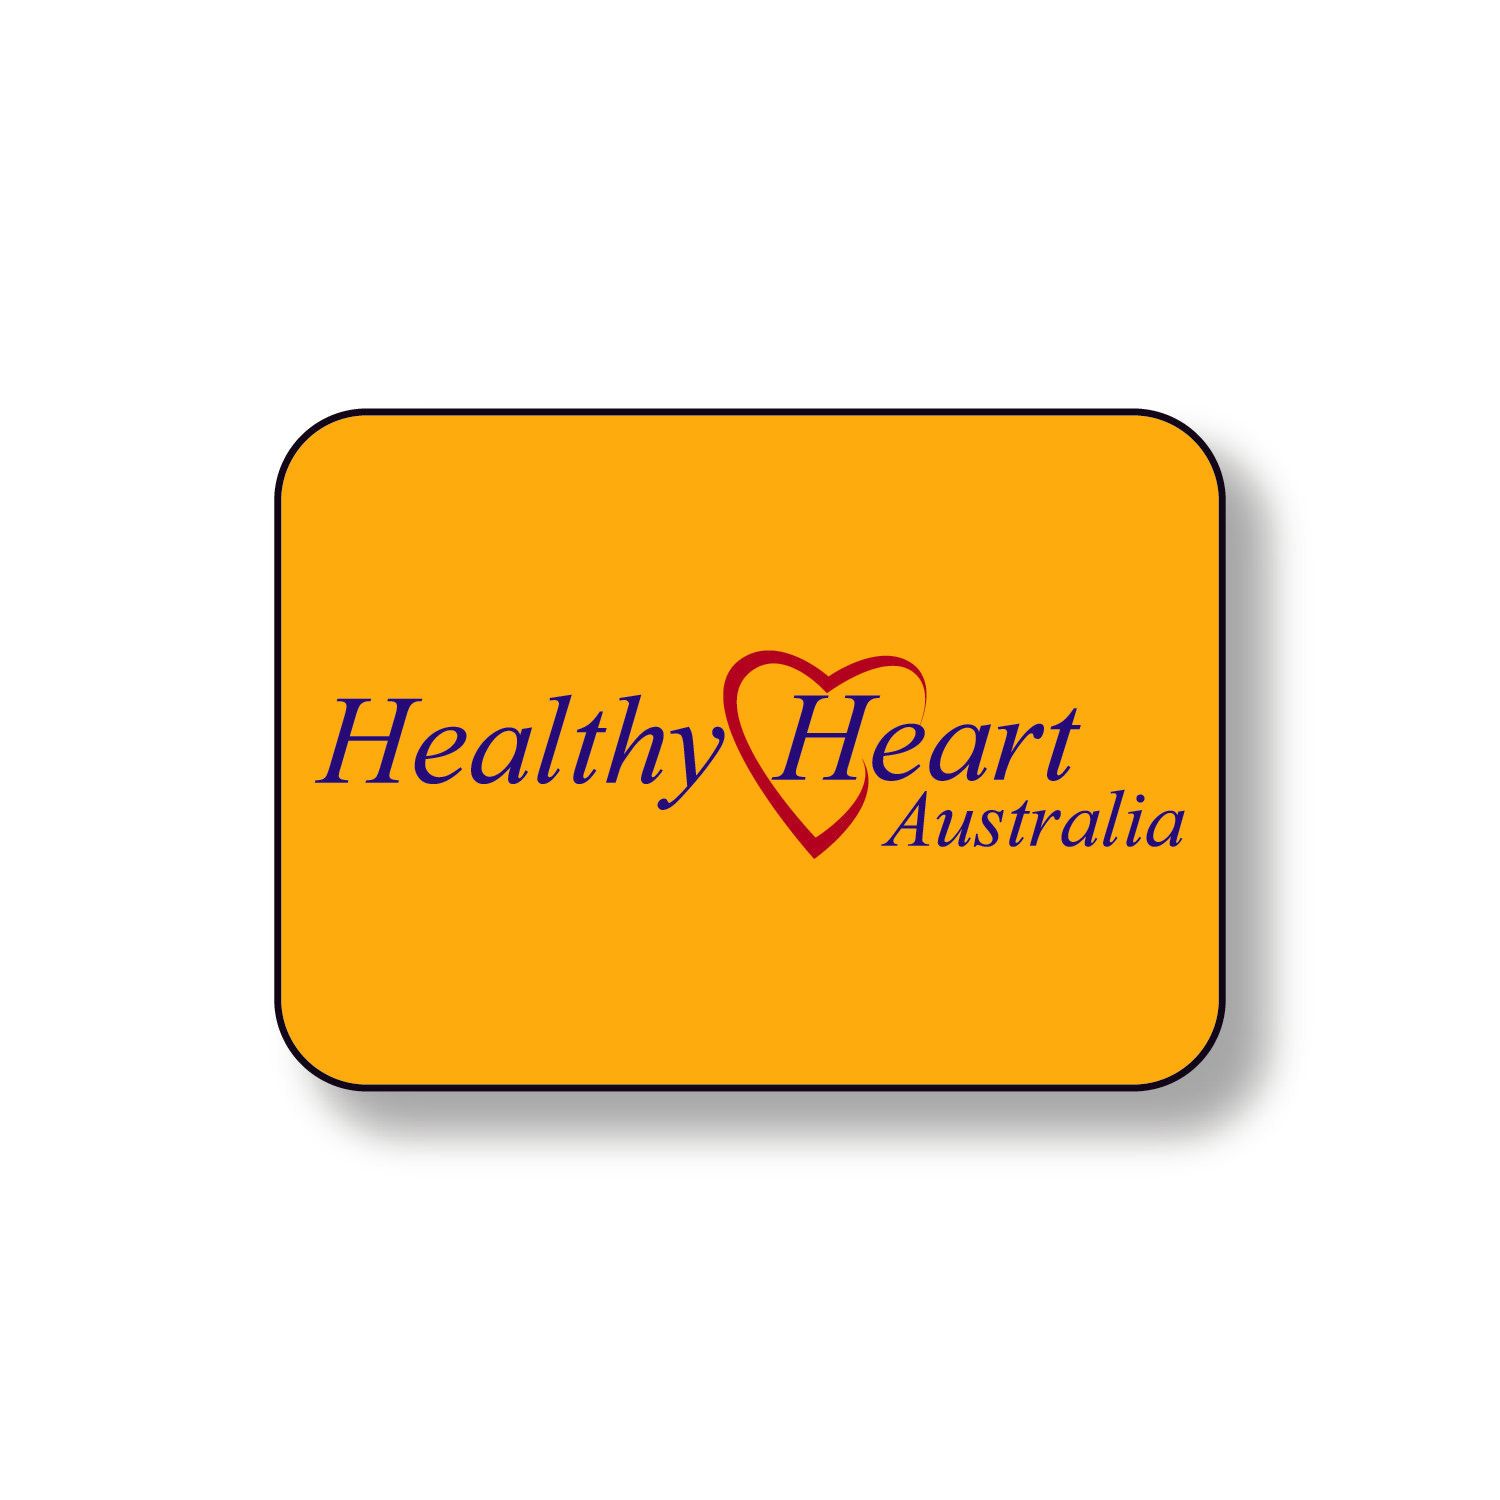 Healthy Heart Australia